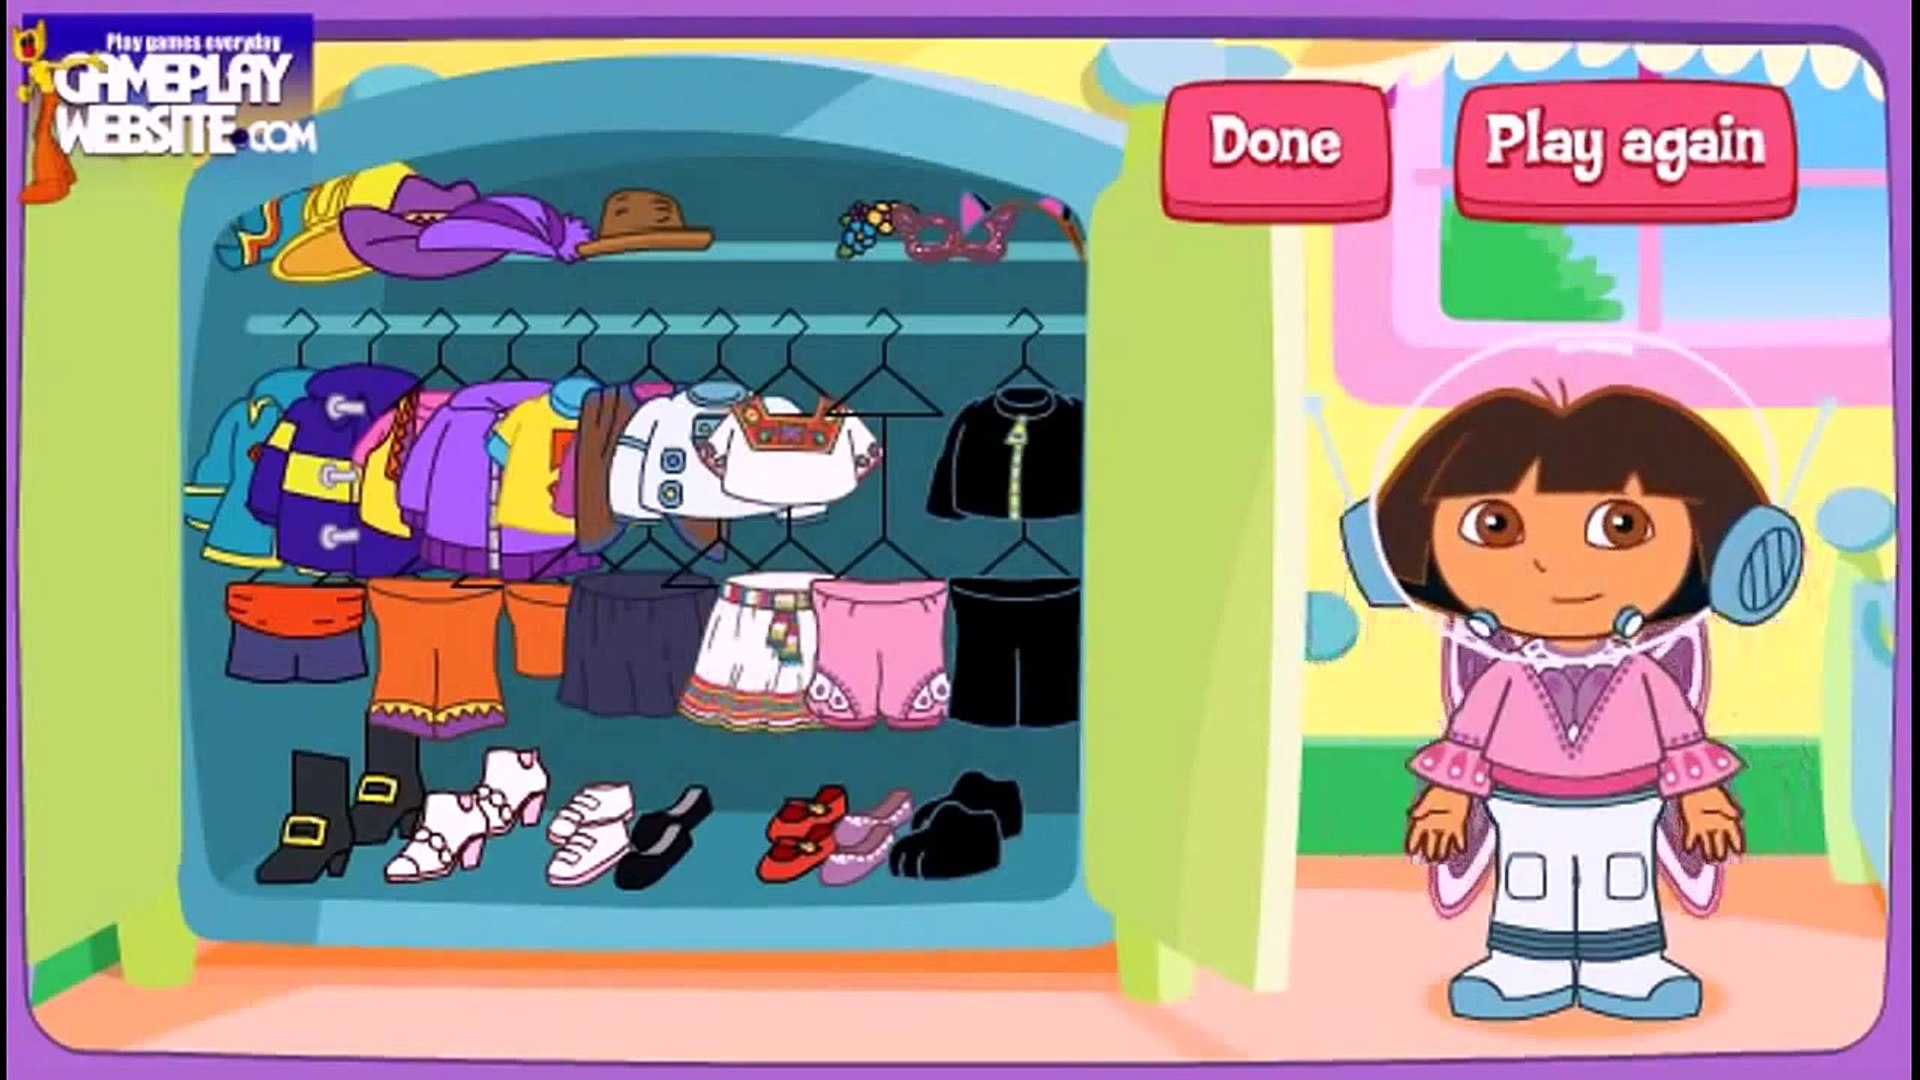 Dora the Explorer full episodes for children in English and Spanish - Dora games